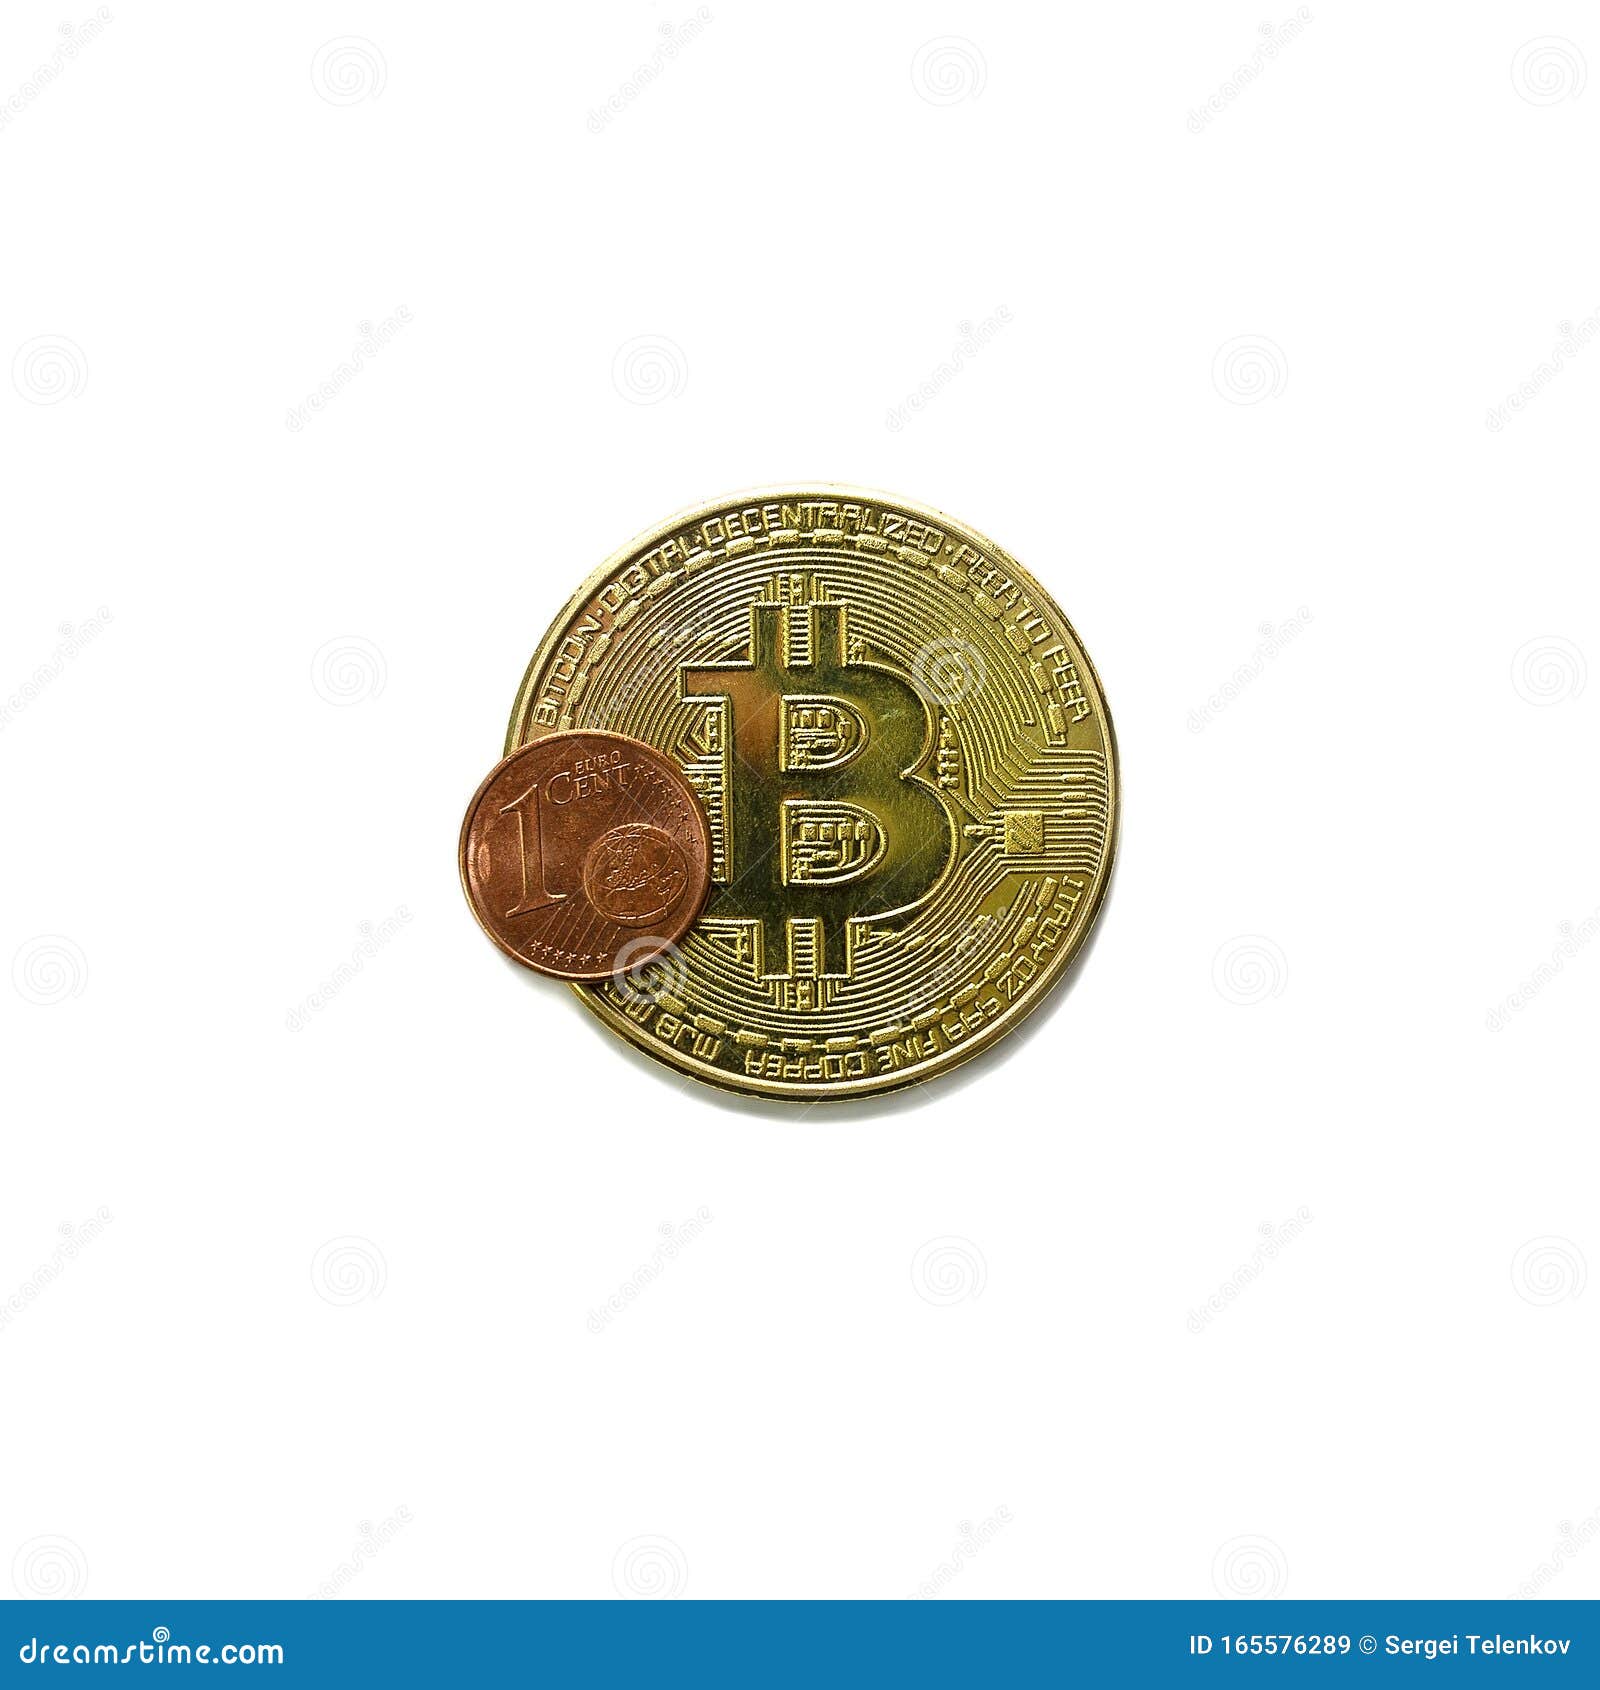 btc nxt tradingview cumpărați bitcoin românia